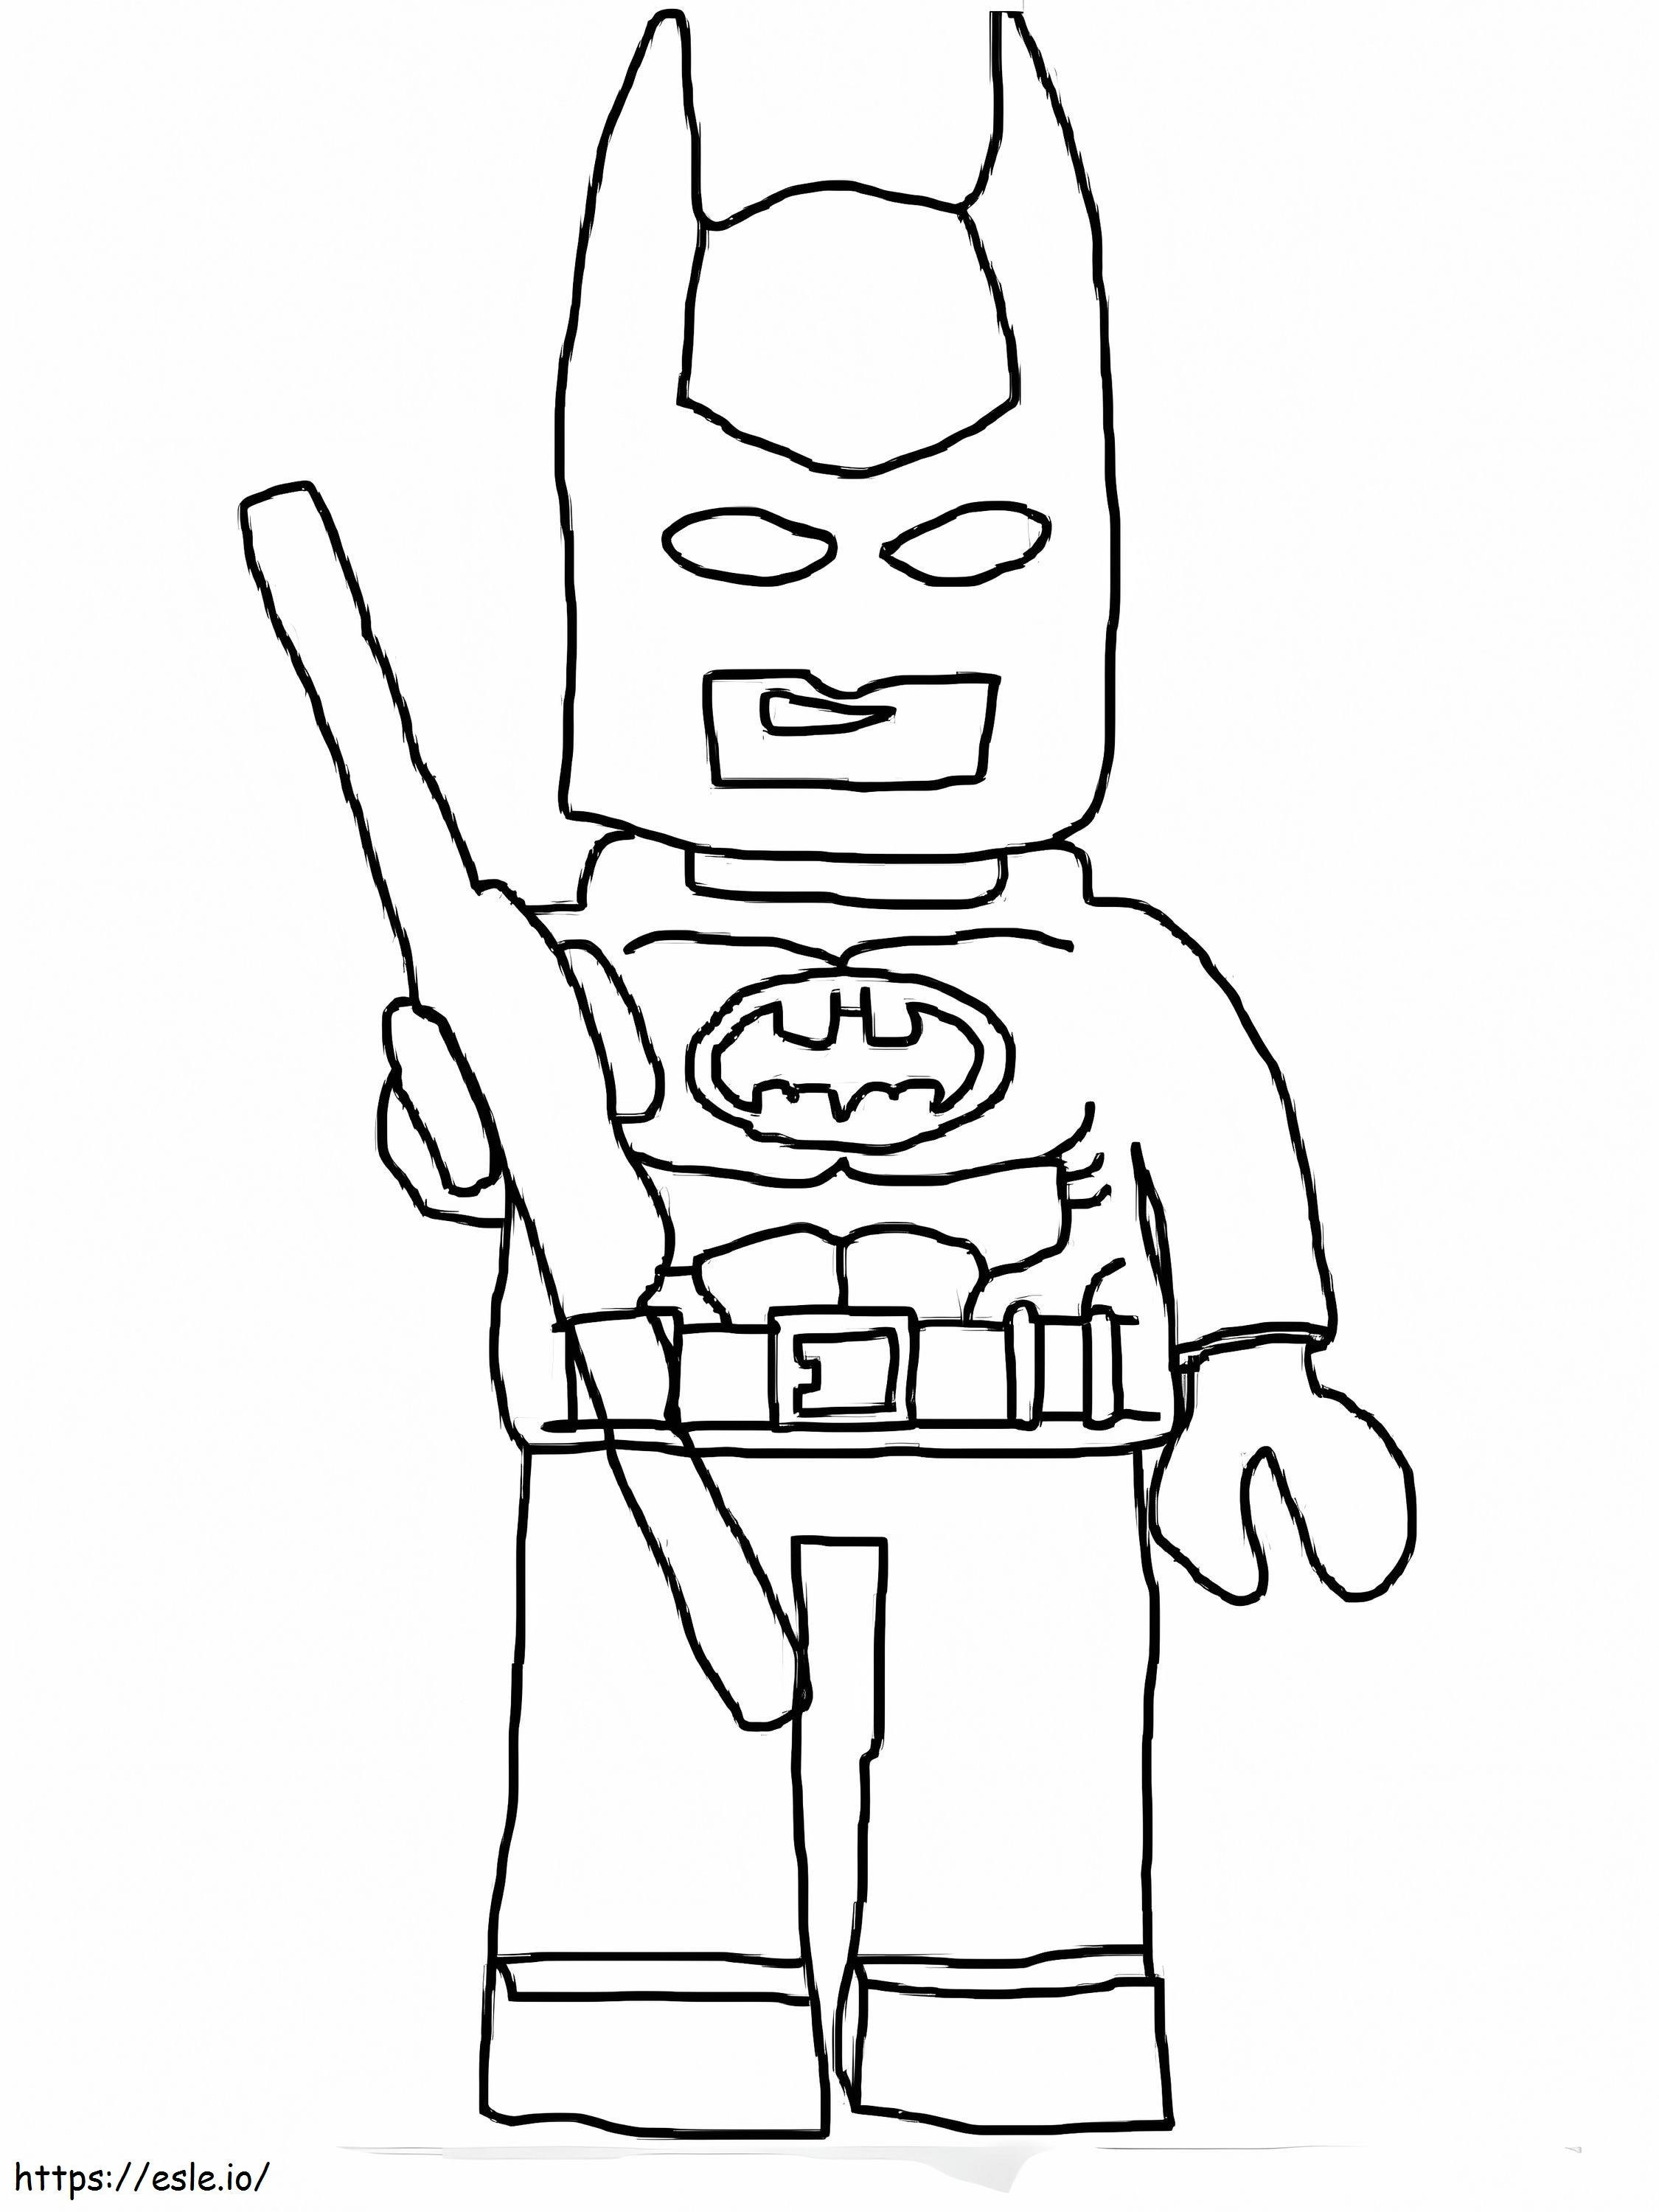 Coloriage LEGO Batman 4 à imprimer dessin